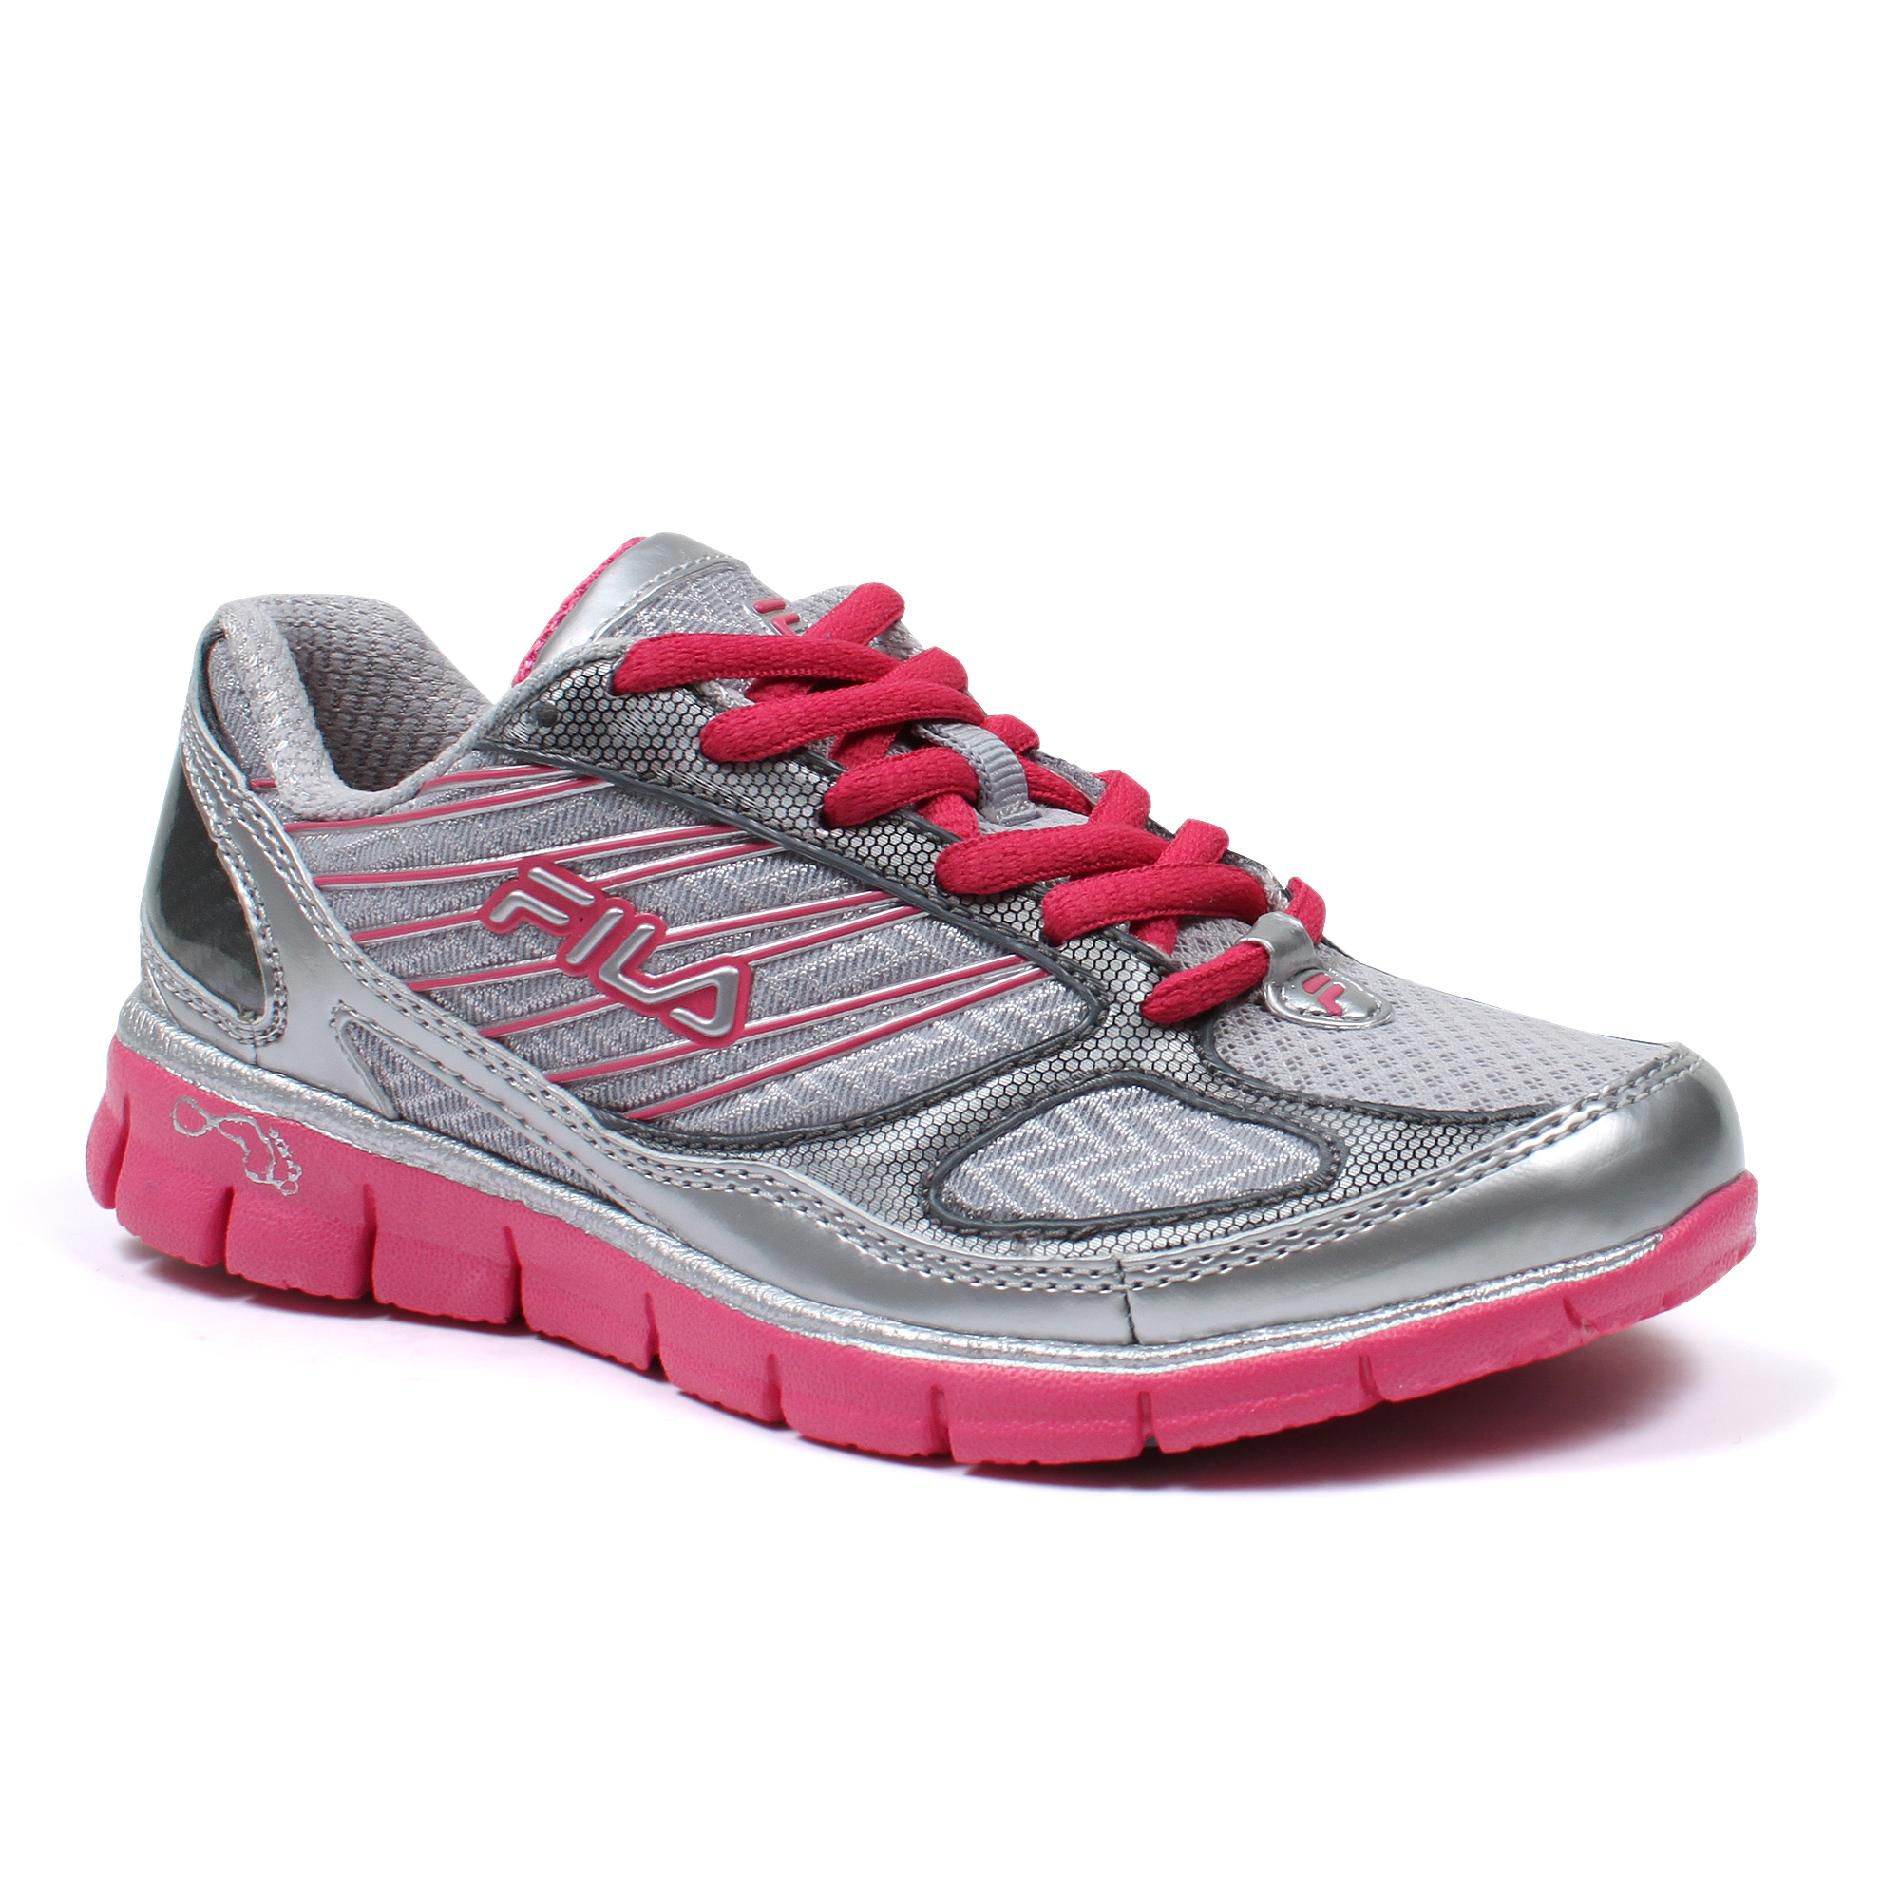 Fila Girl'sAthletic Shoe  2A Advanced - Silver/Pink/Gray